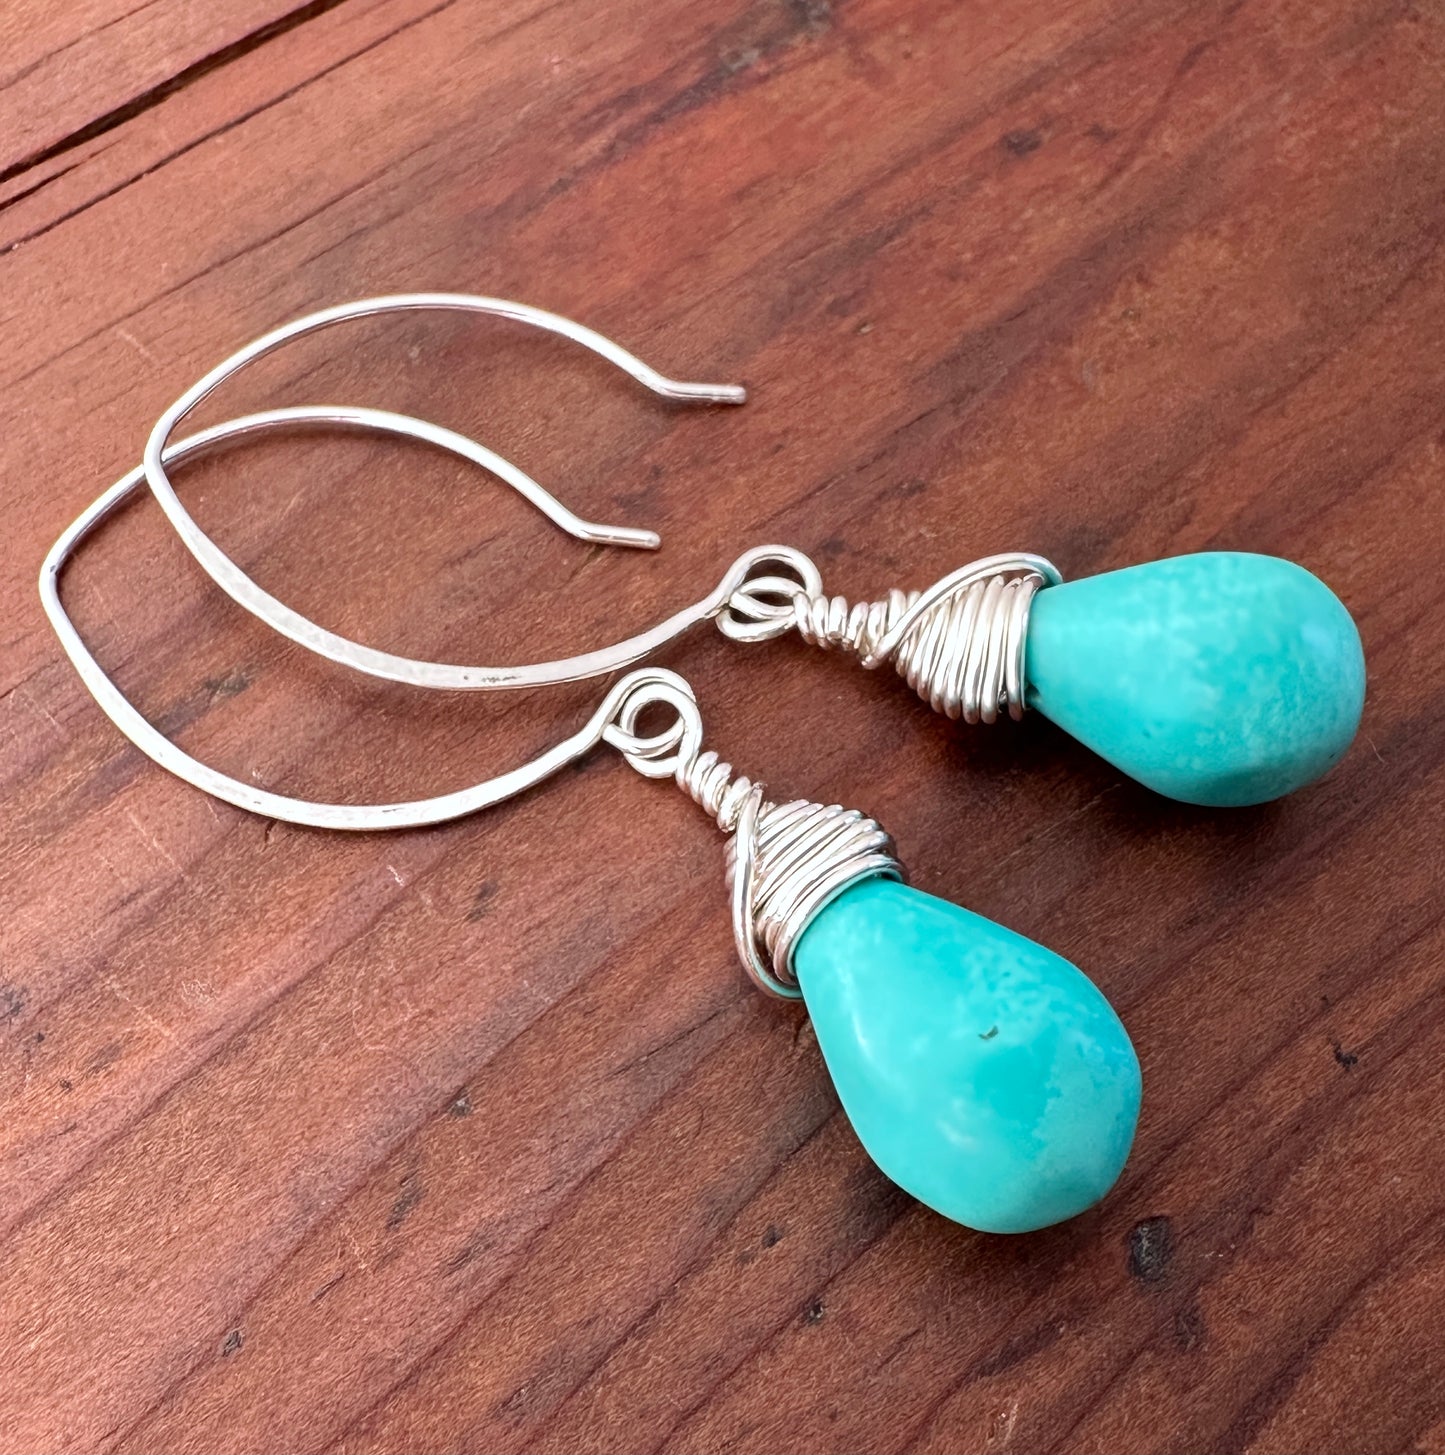 Teardrop Turquoise Wire Wrapped Earrings on Almond Shaped Silver Ear Wires